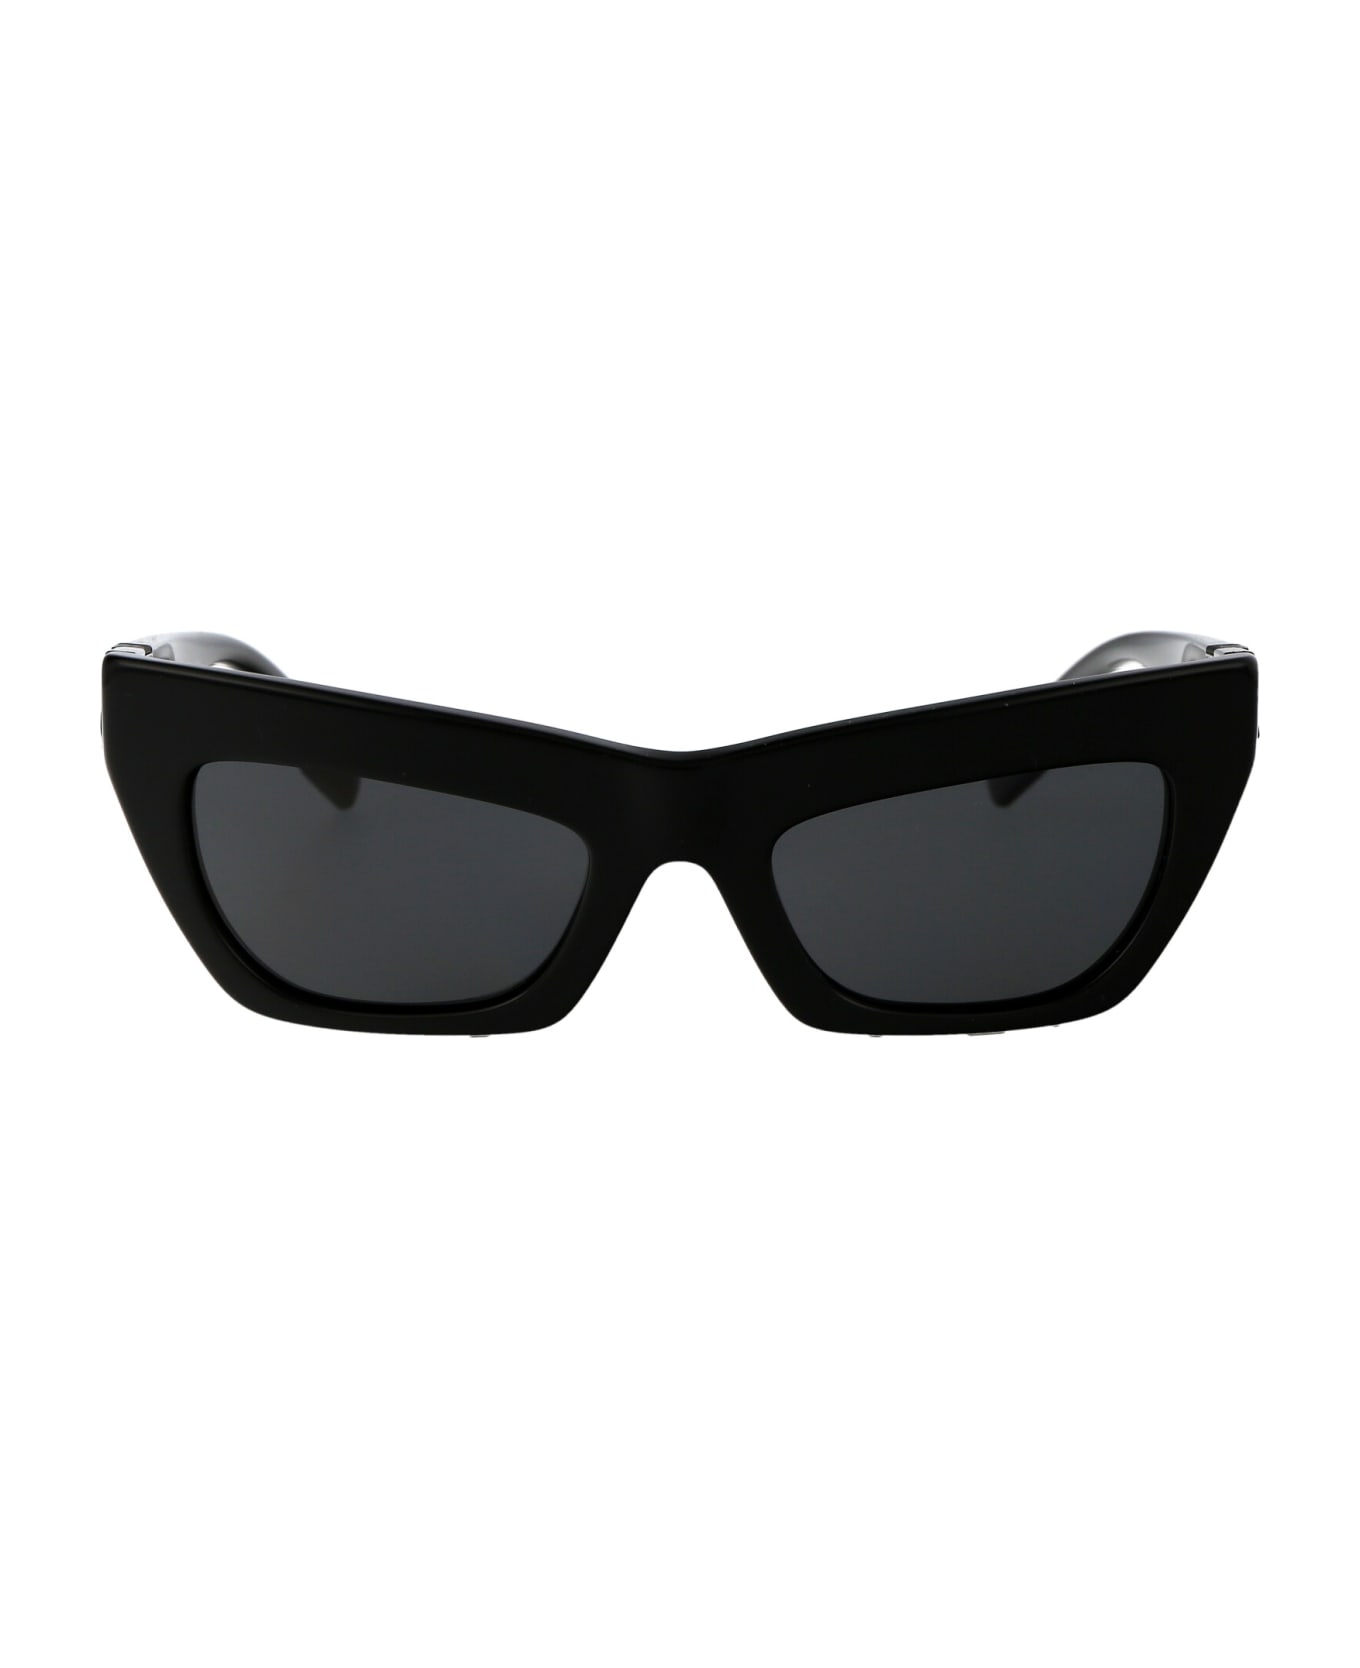 Burberry Eyewear 0be4405 Sunglasses gold - 409387 Black